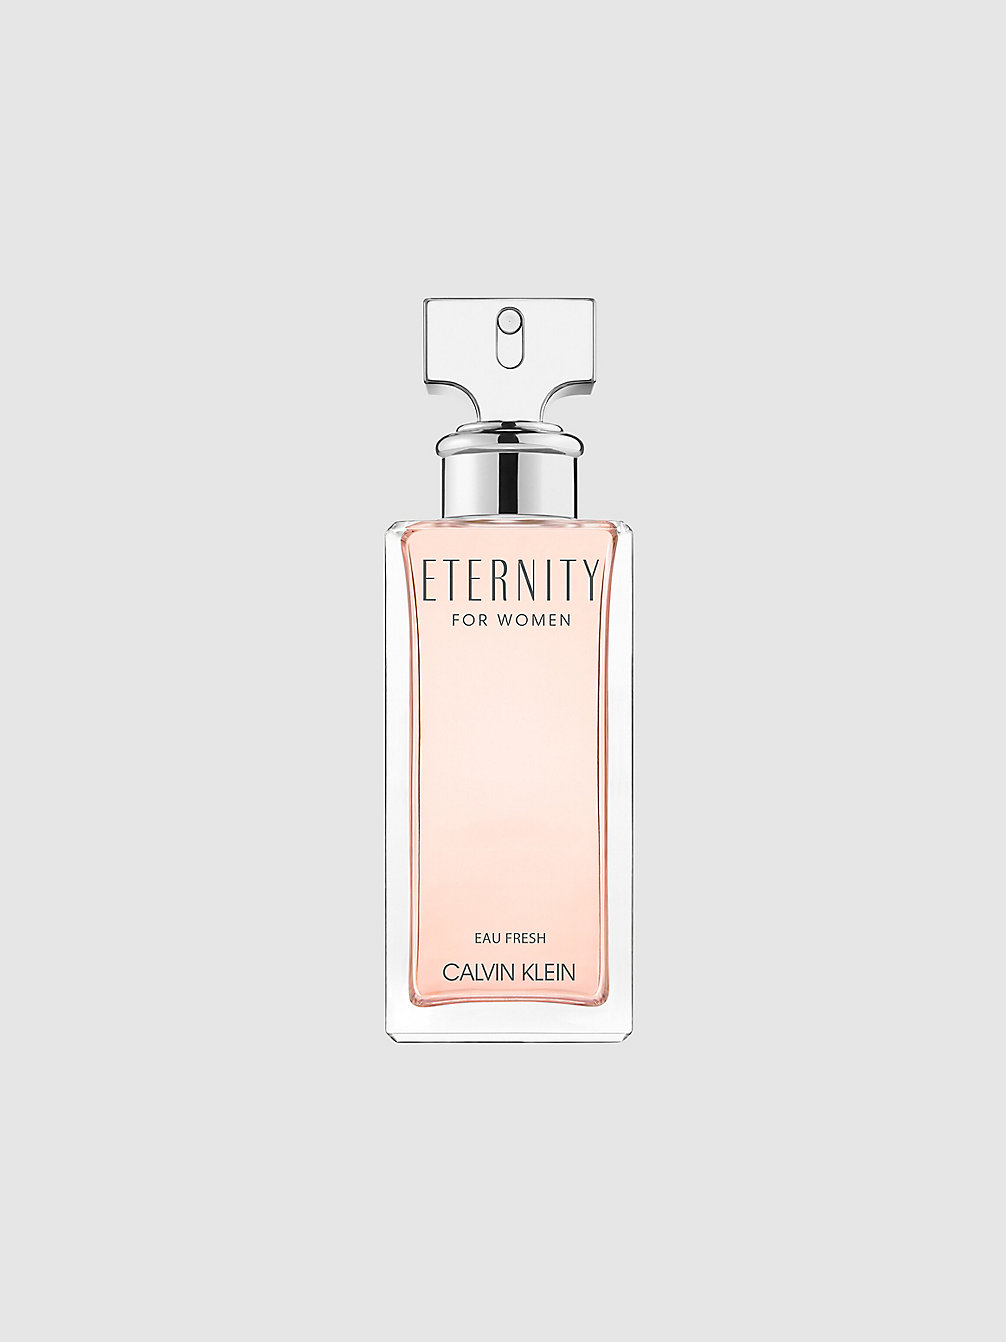 MULTI > Eternity Eau Fresh For Her  - 100 Ml - Eau De Parfum > undefined Damen - Calvin Klein